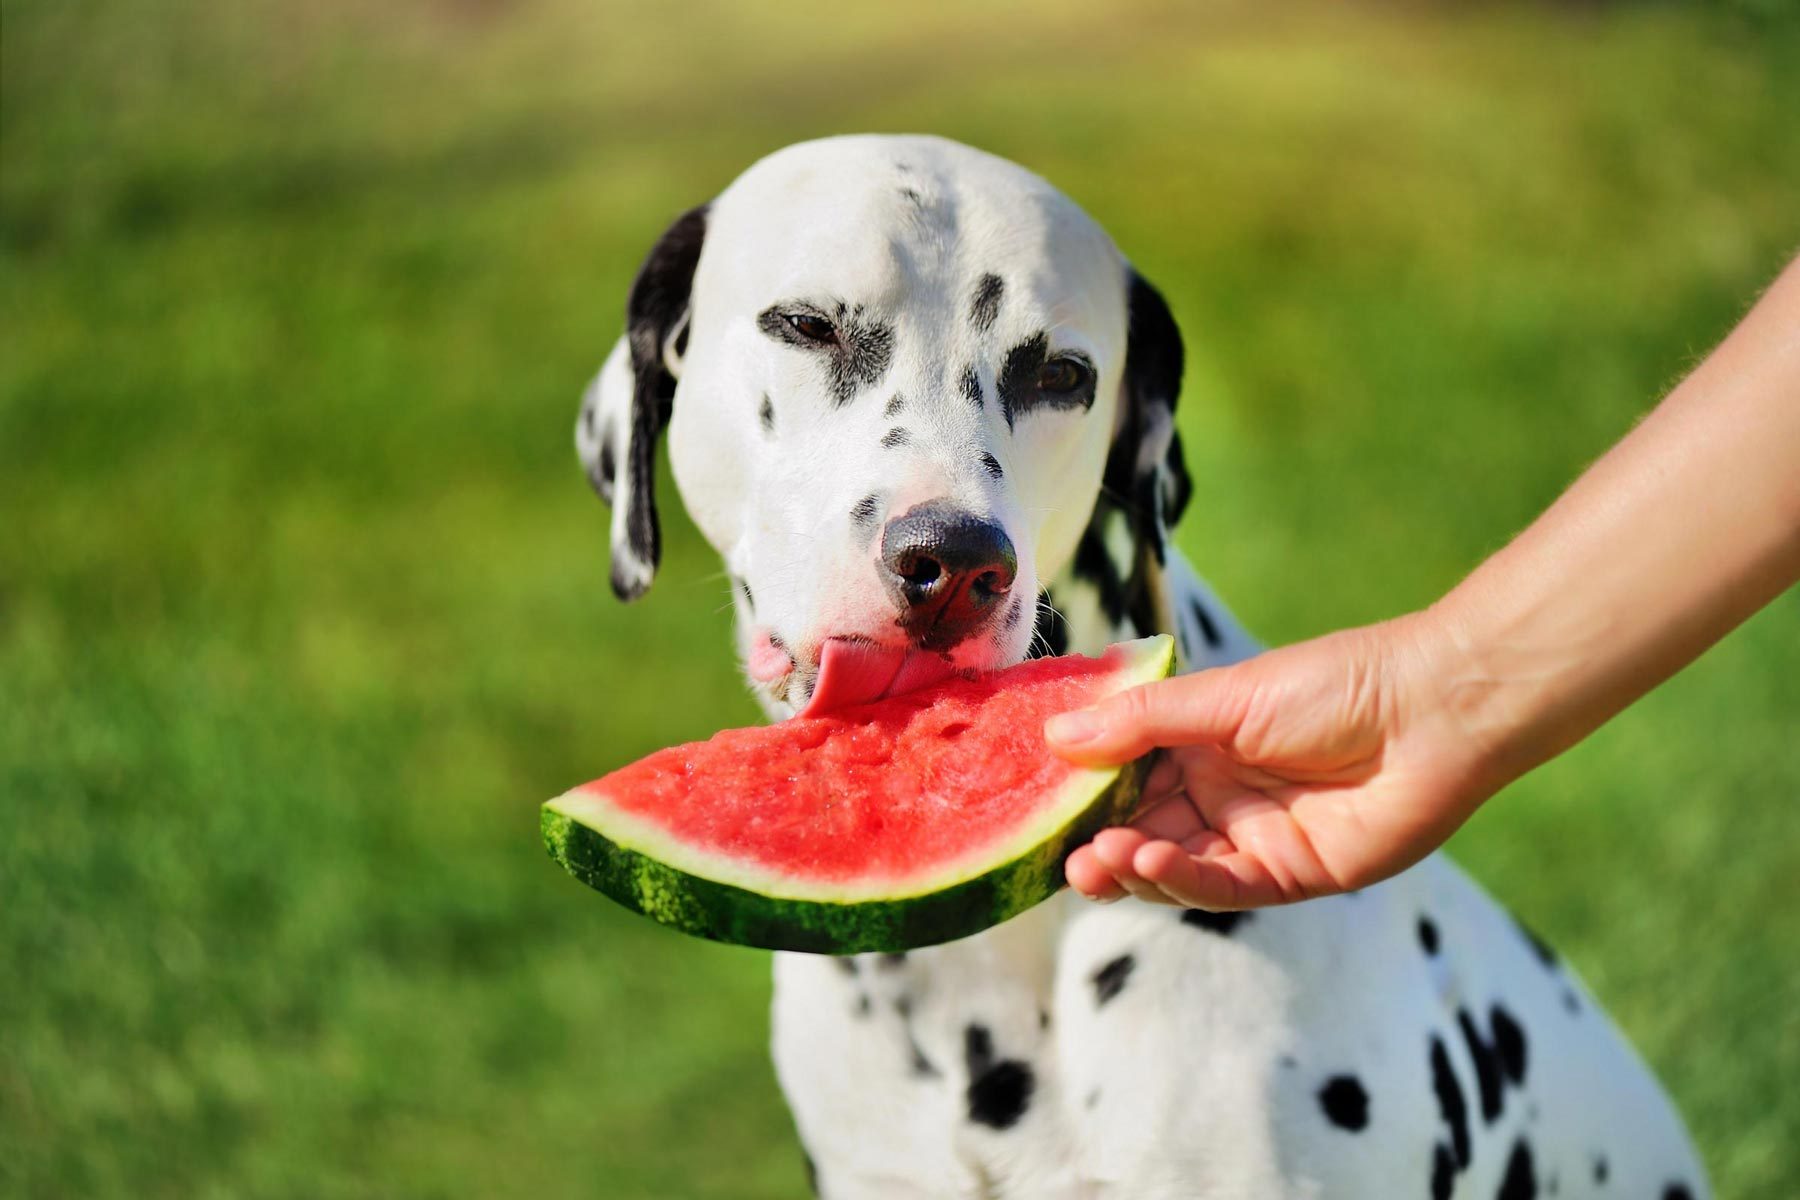 Dalmatian dog licking slice of watermelon